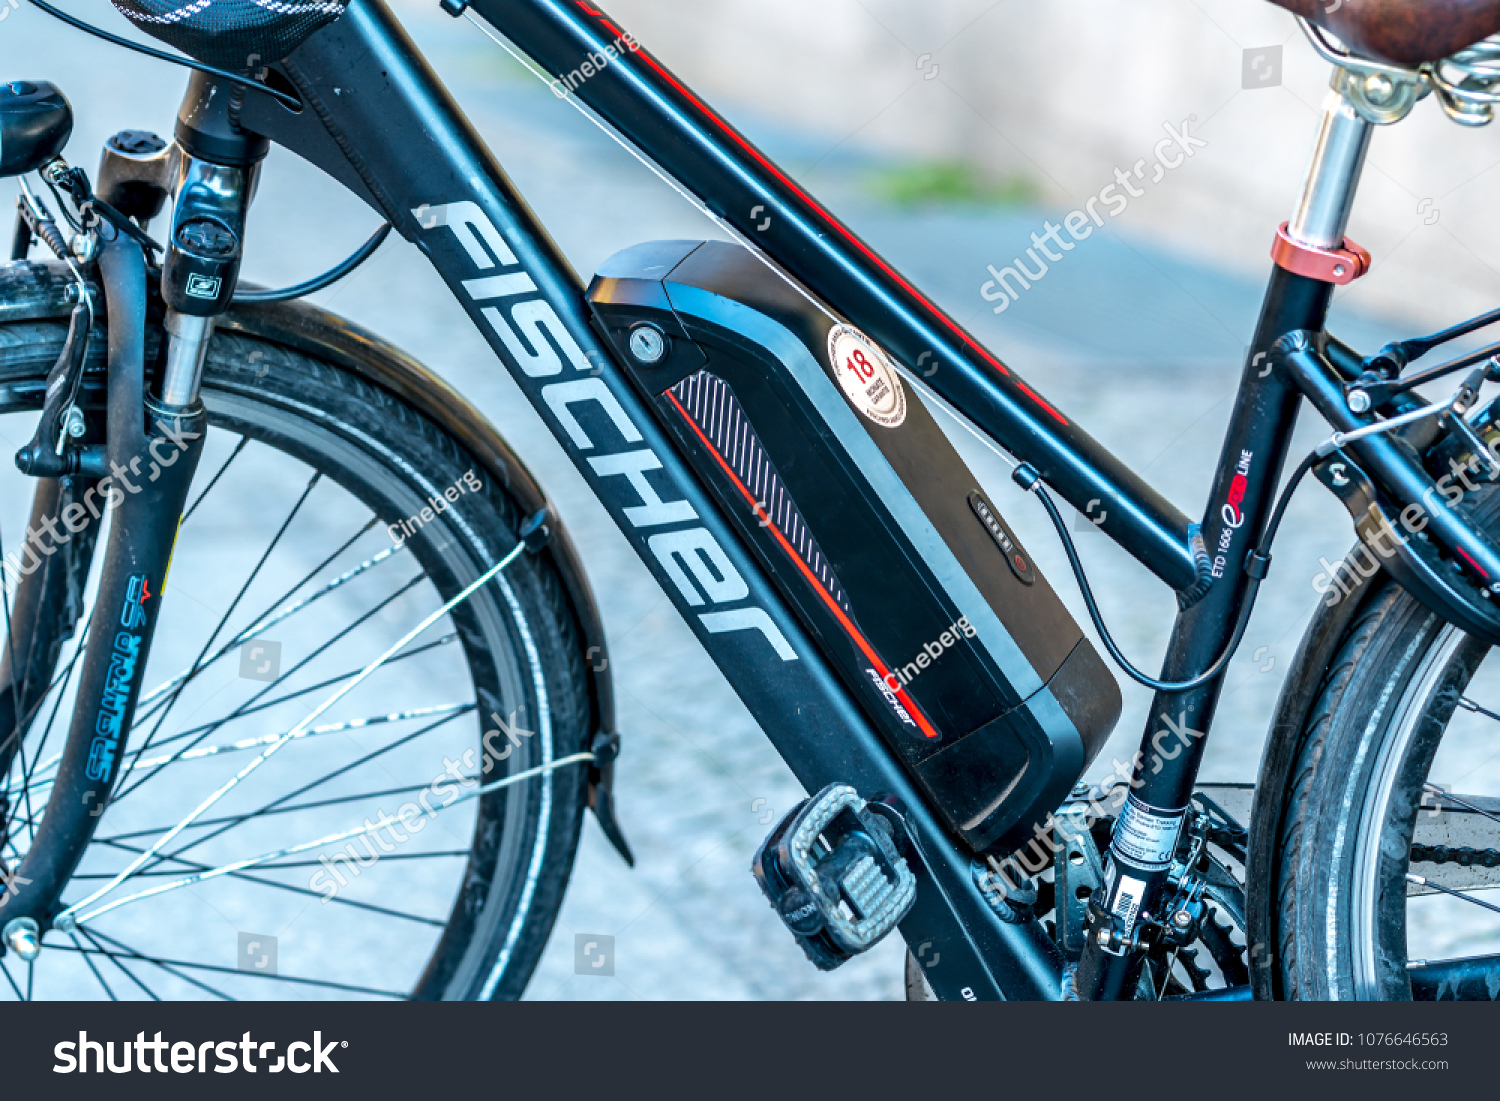 german bike company